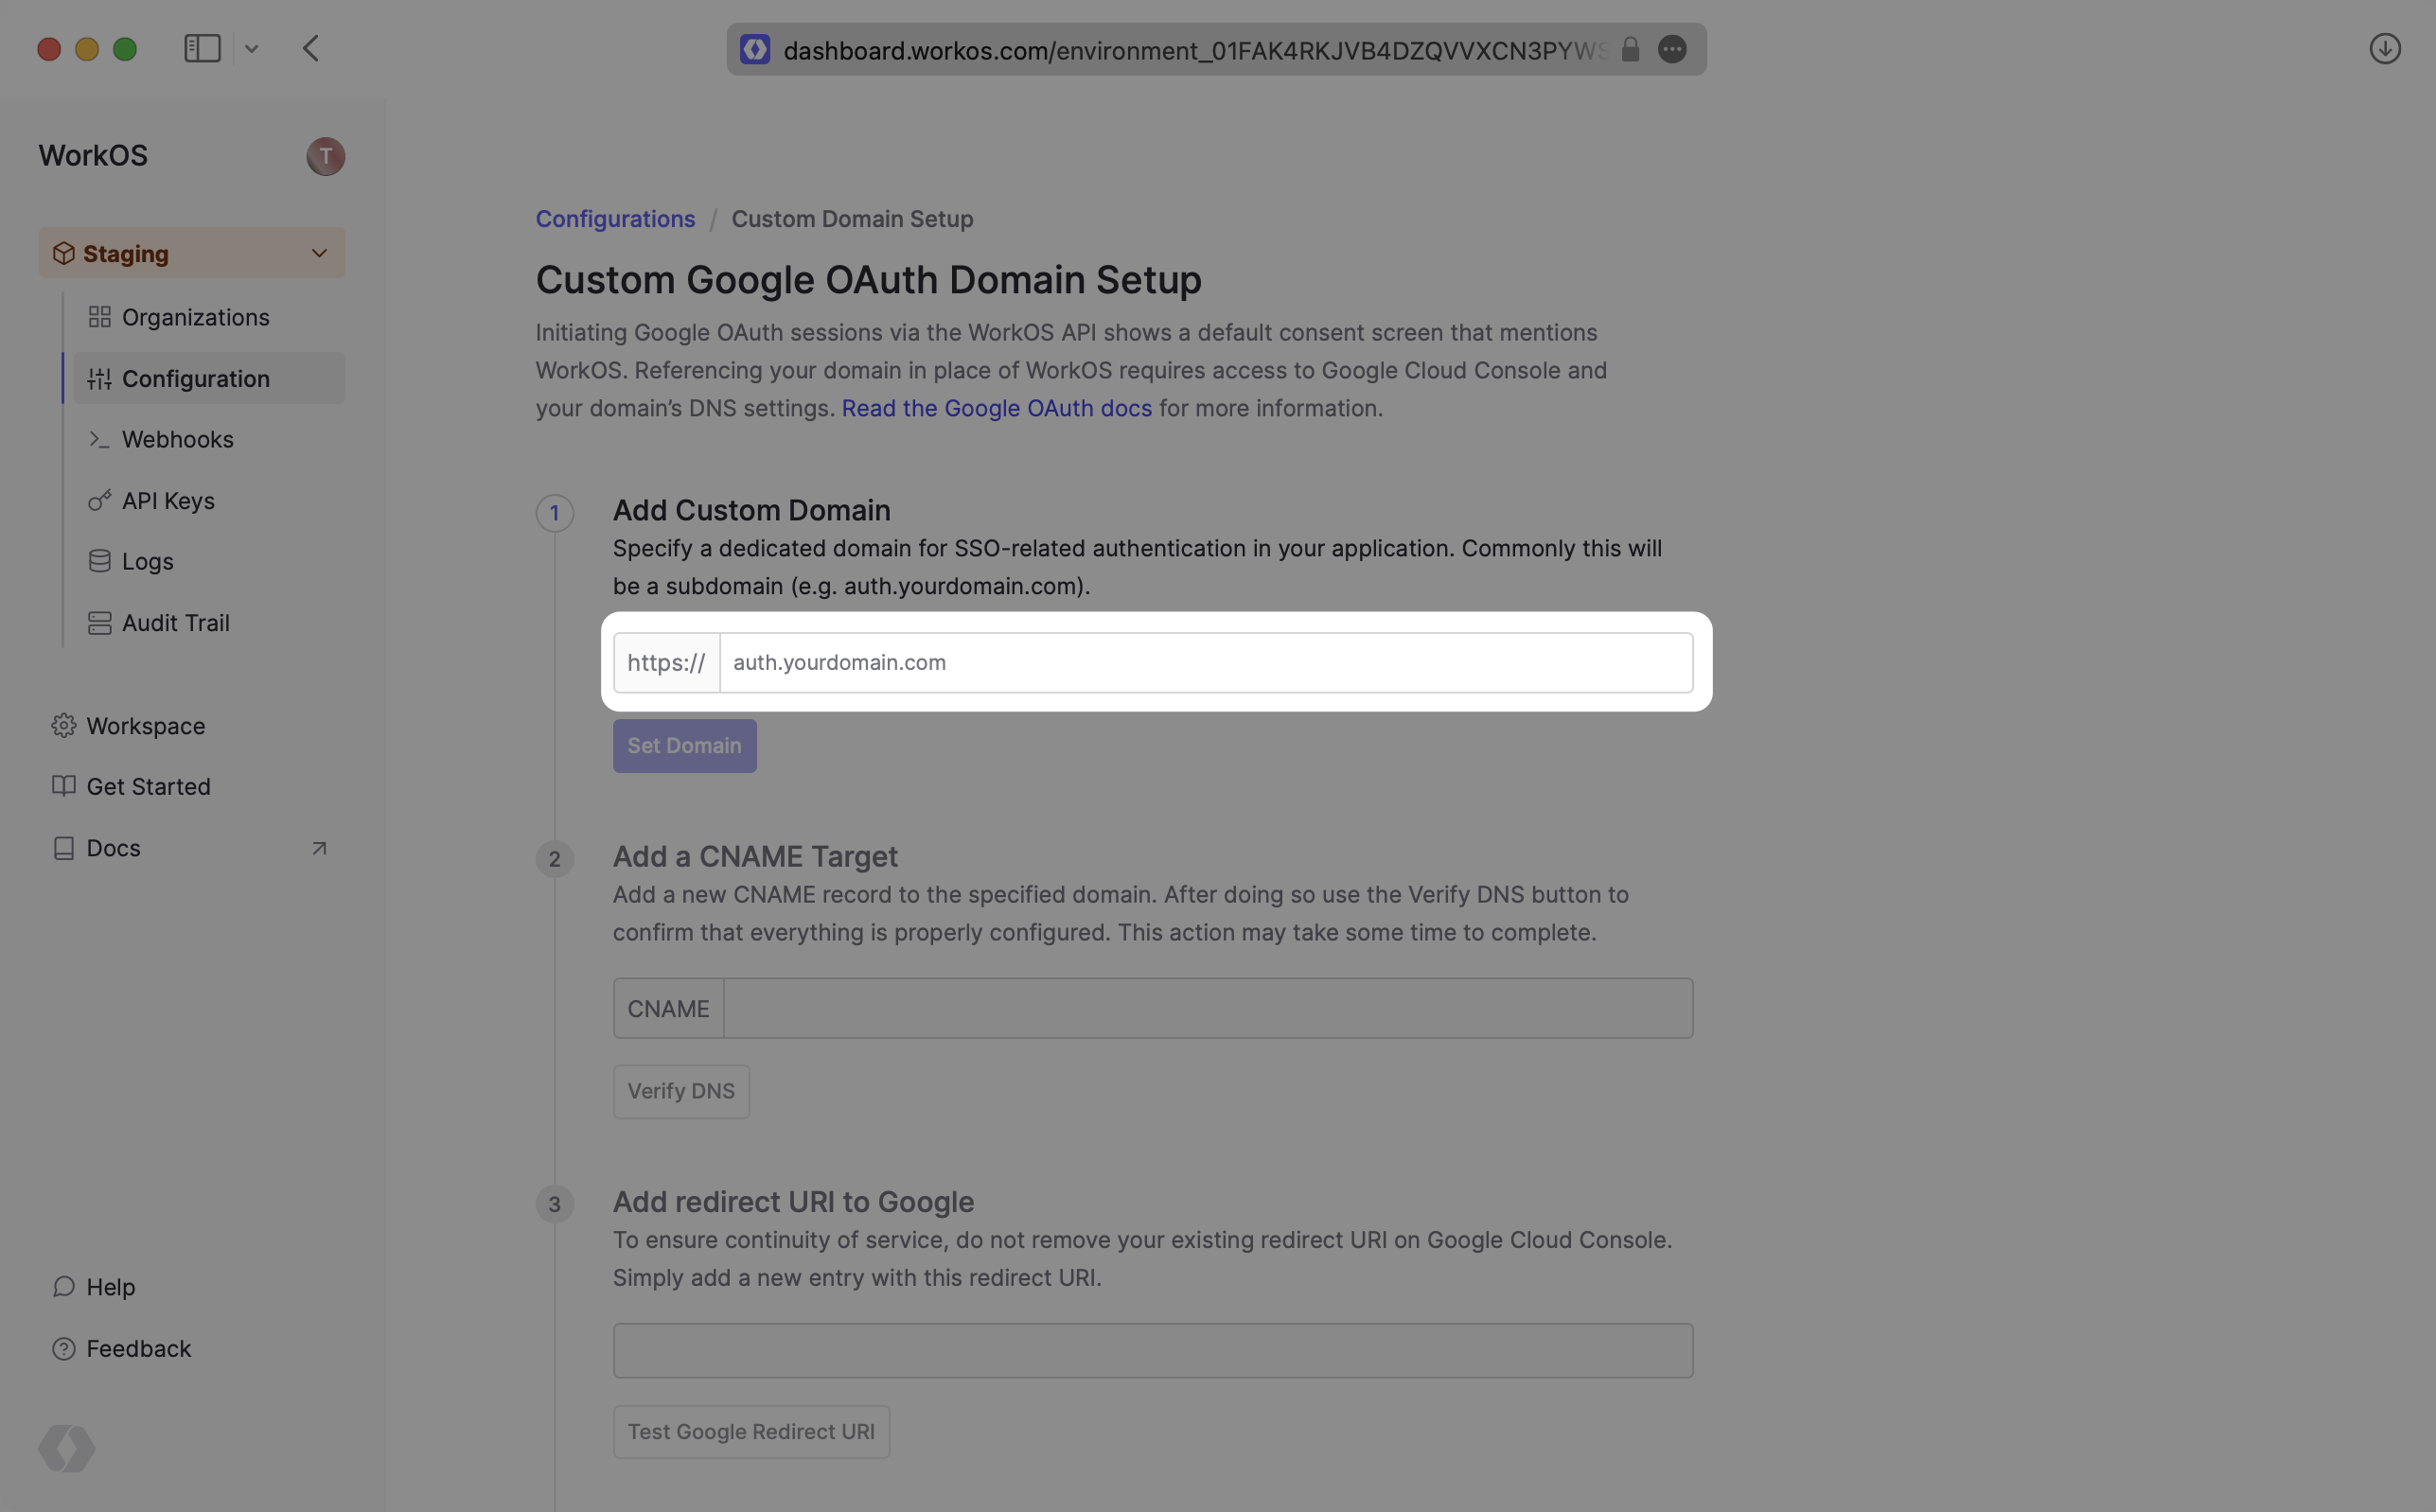 Add Custom Domain